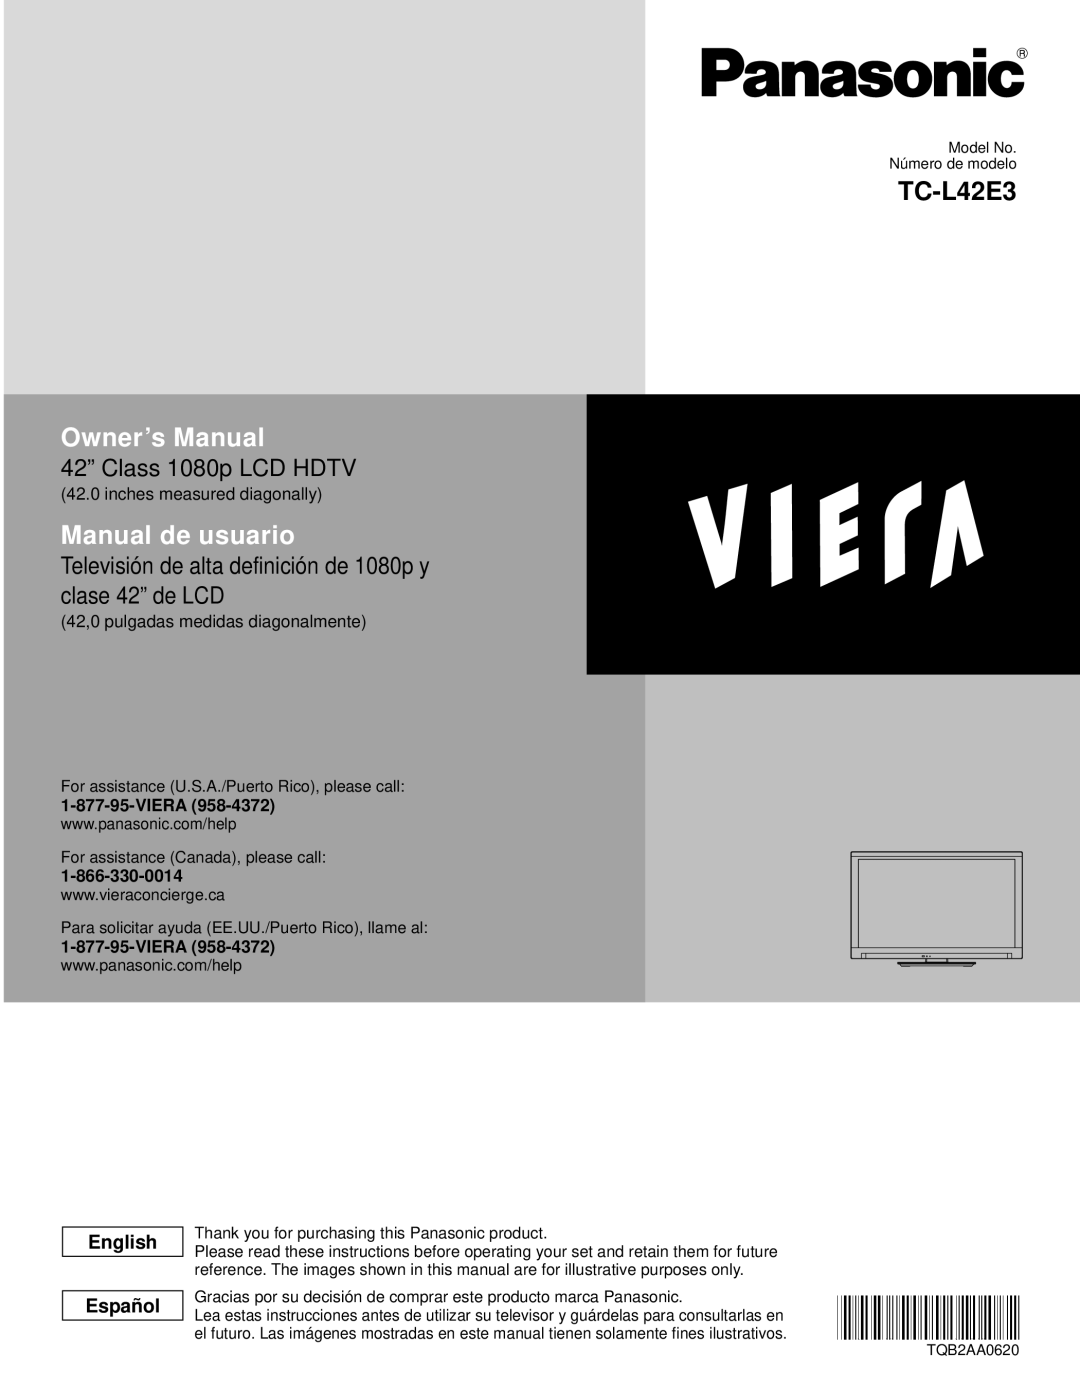 Panasonic TC-L42E3 owner manual English Español, Viera, Owner’s Manual, Manual de usuario, 42” Class 1080p LCD HDTV 